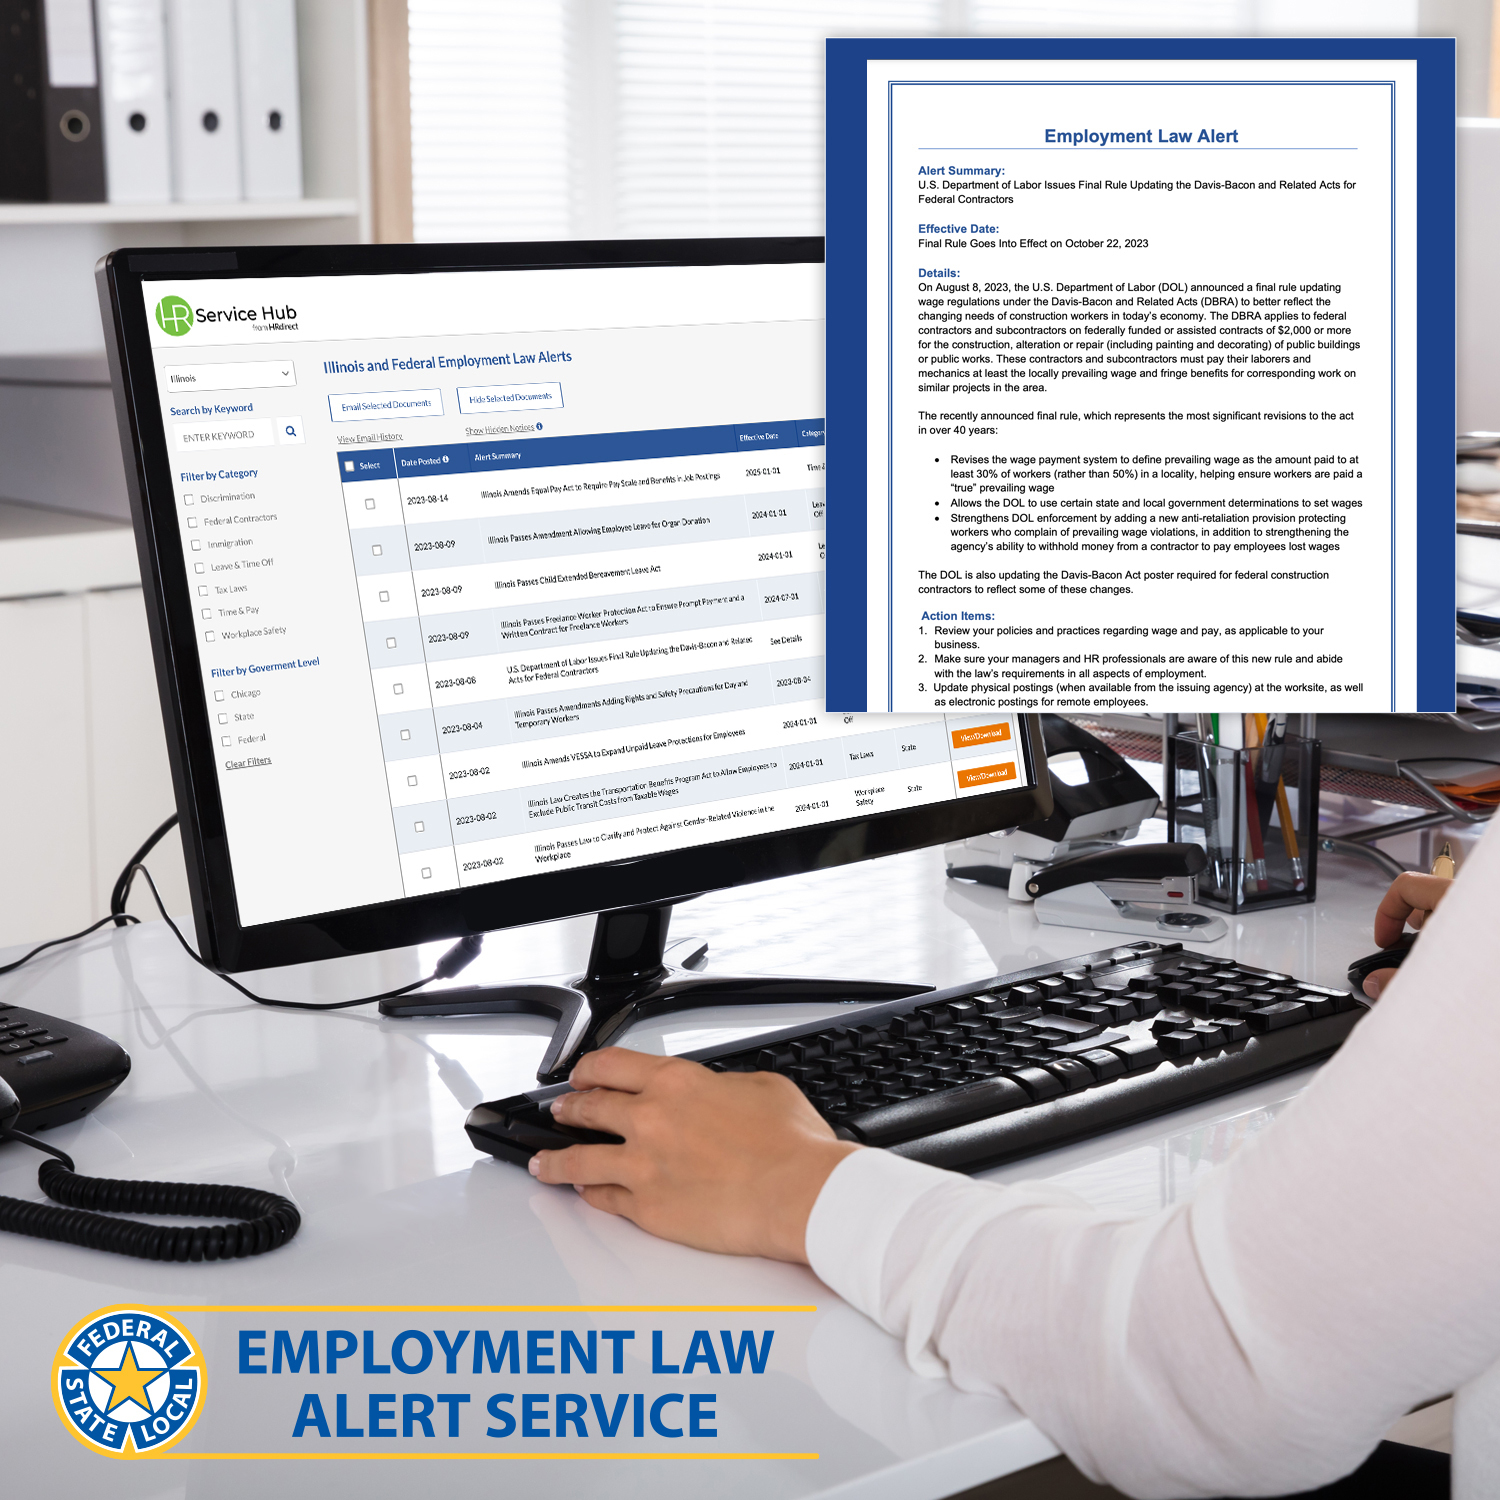 Employment Law Alert Service